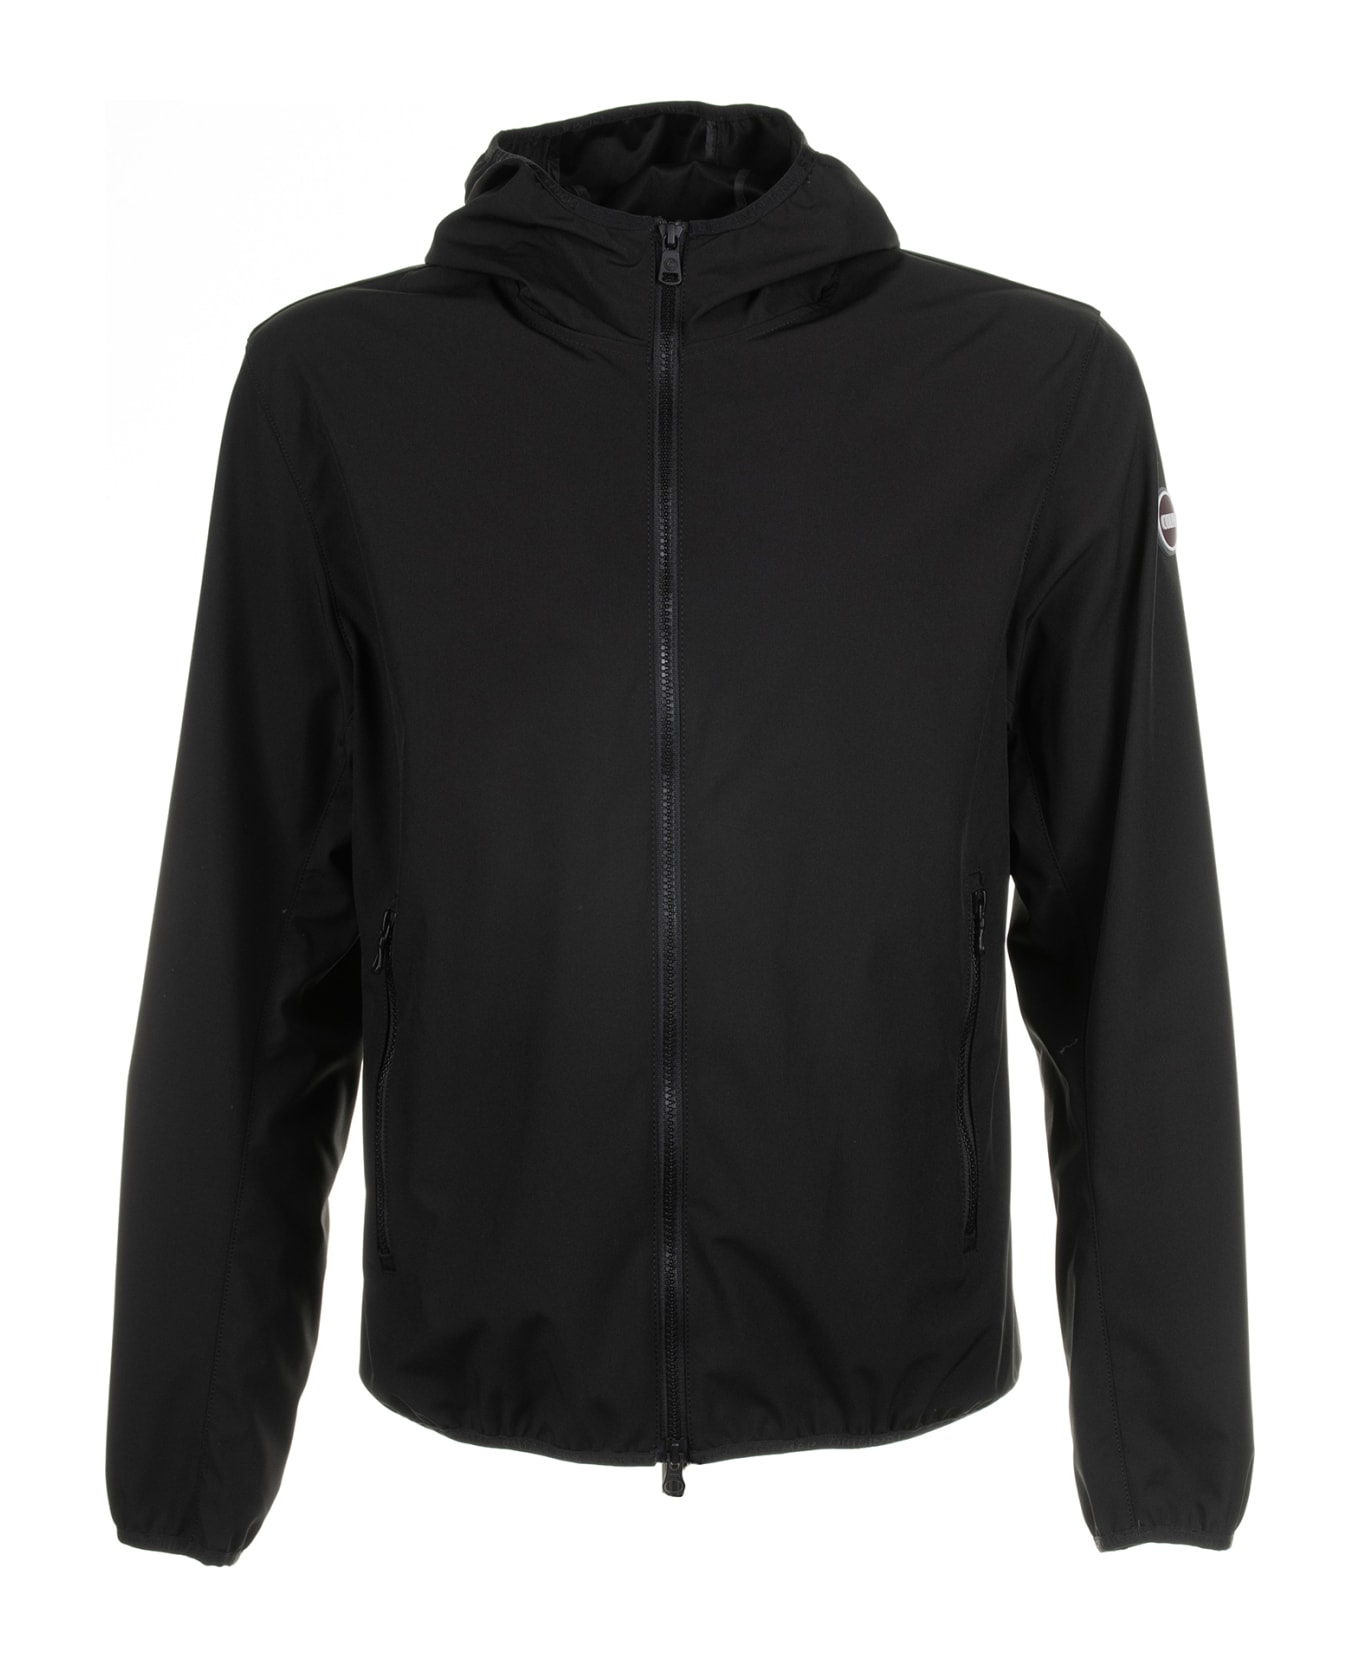 Colmar Black Softshell Jacket With Hood - NERO